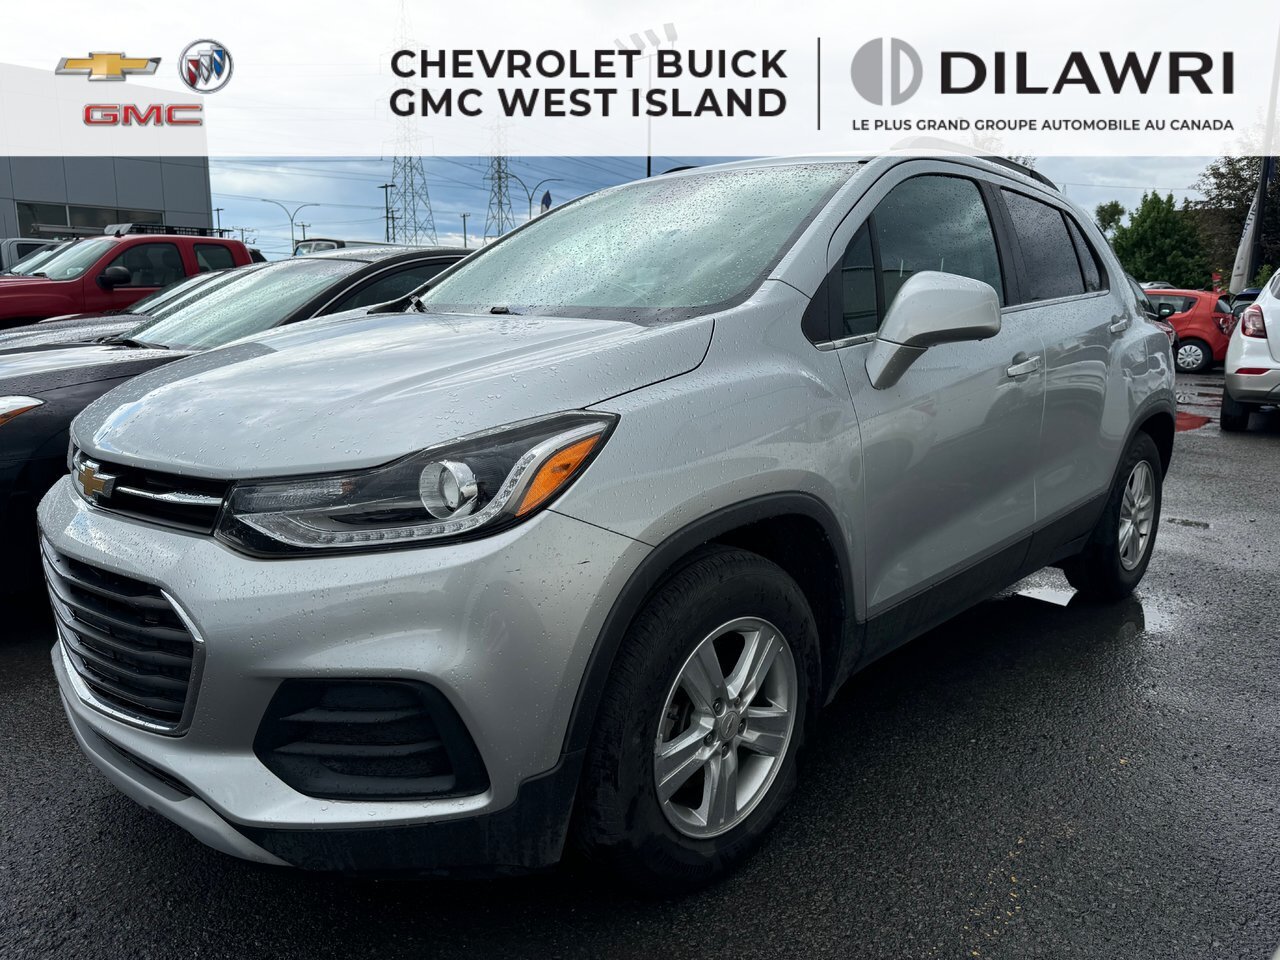 2018 Chevrolet Trax LT * AWD * Climatisation * Bluetooth * Toujours bi